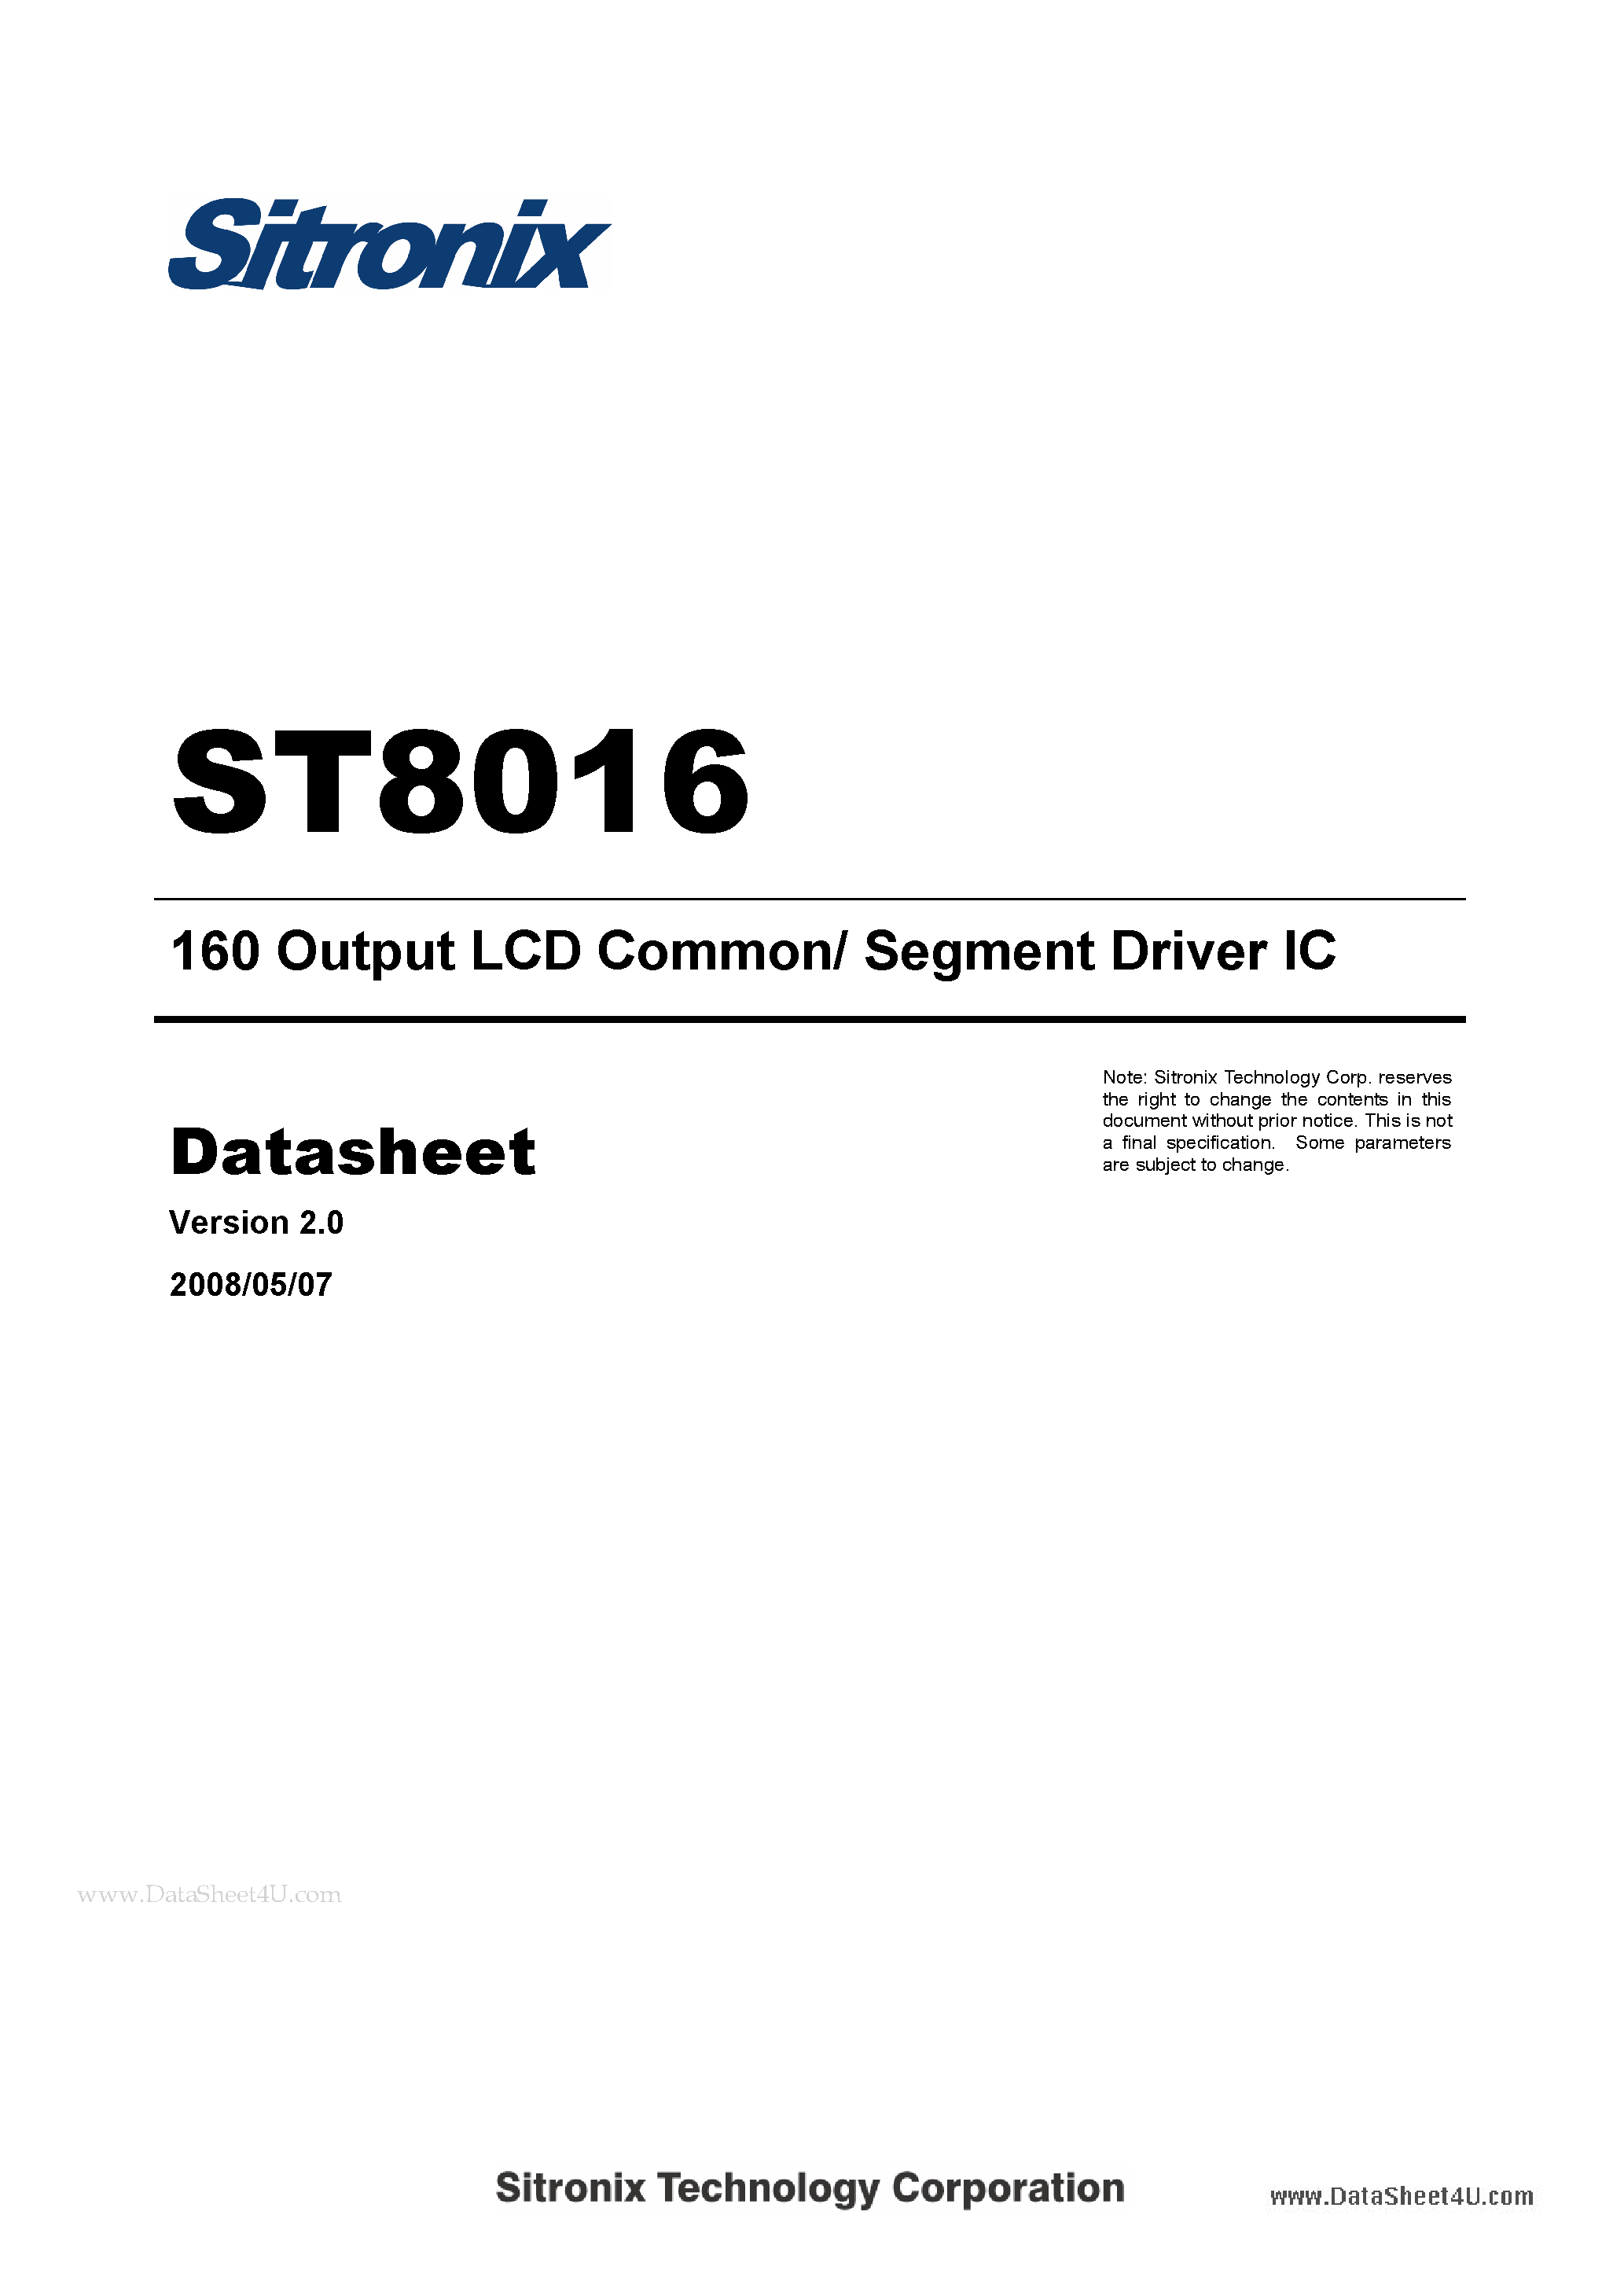 Даташит ST8016 - 160 Output LCD Common/ Segment Driver IC страница 1